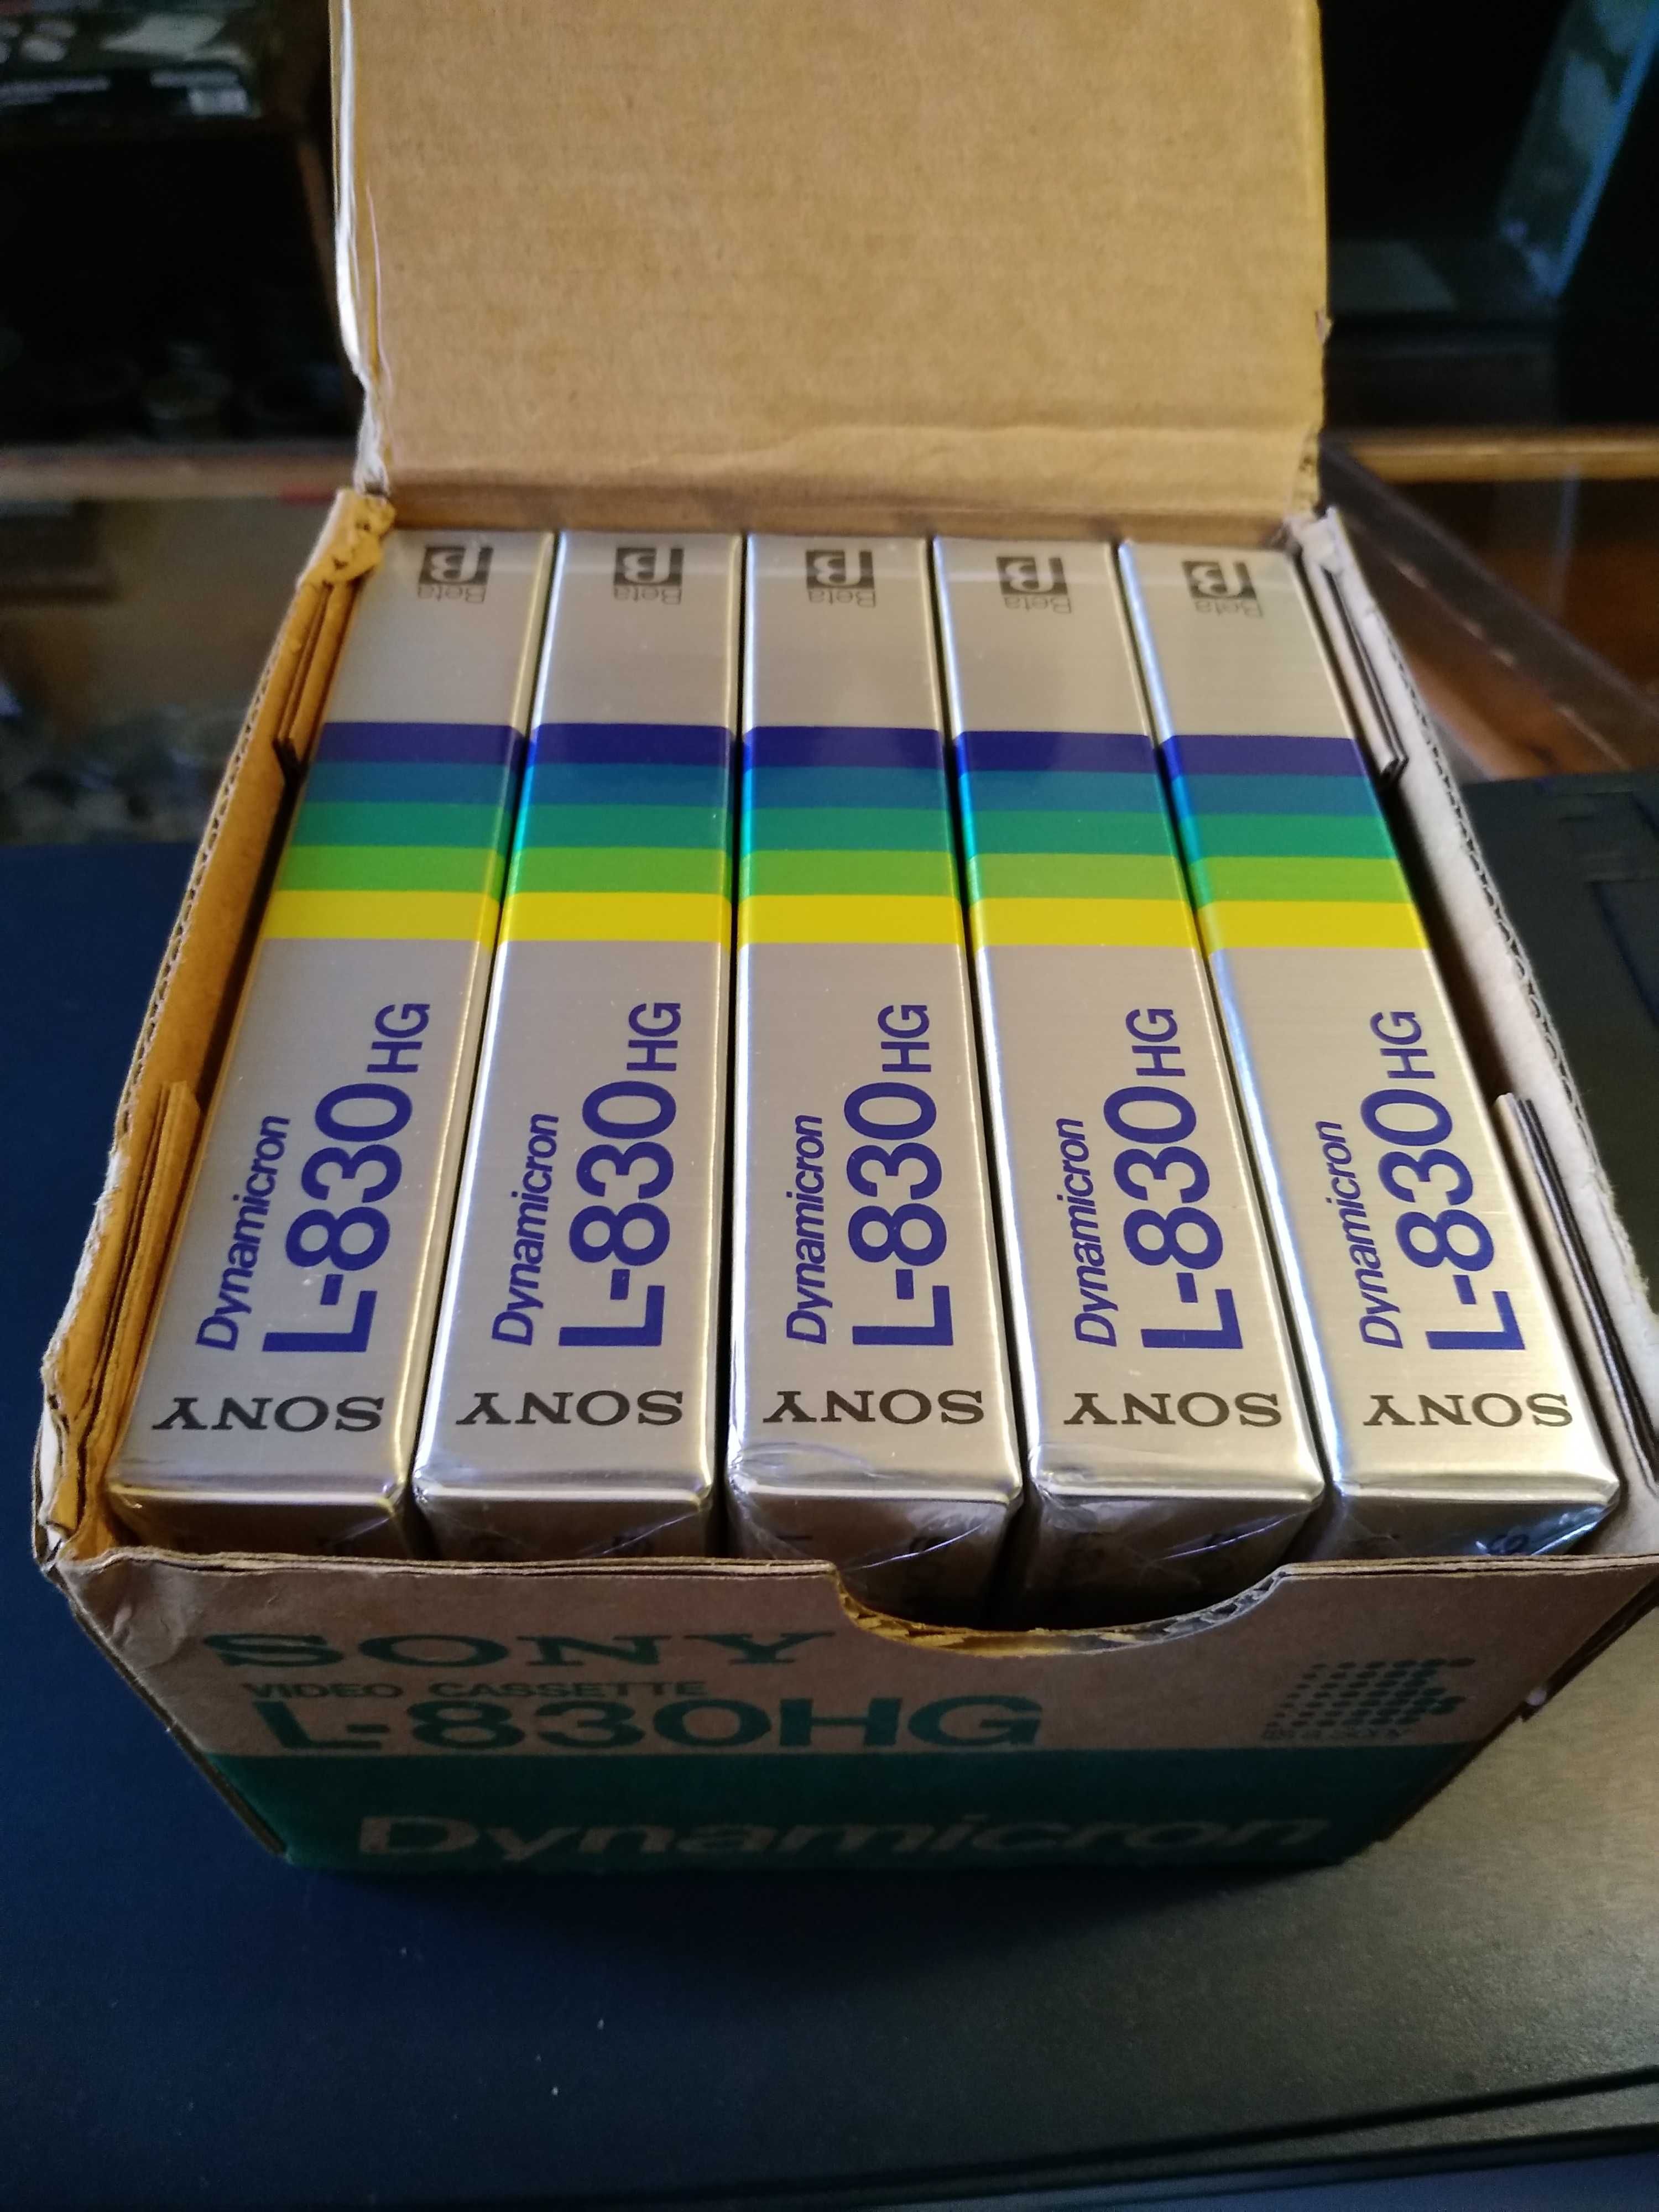 Видеокассеты формата BETAMAX:
- Sony Dynamicron L-250/830 NG